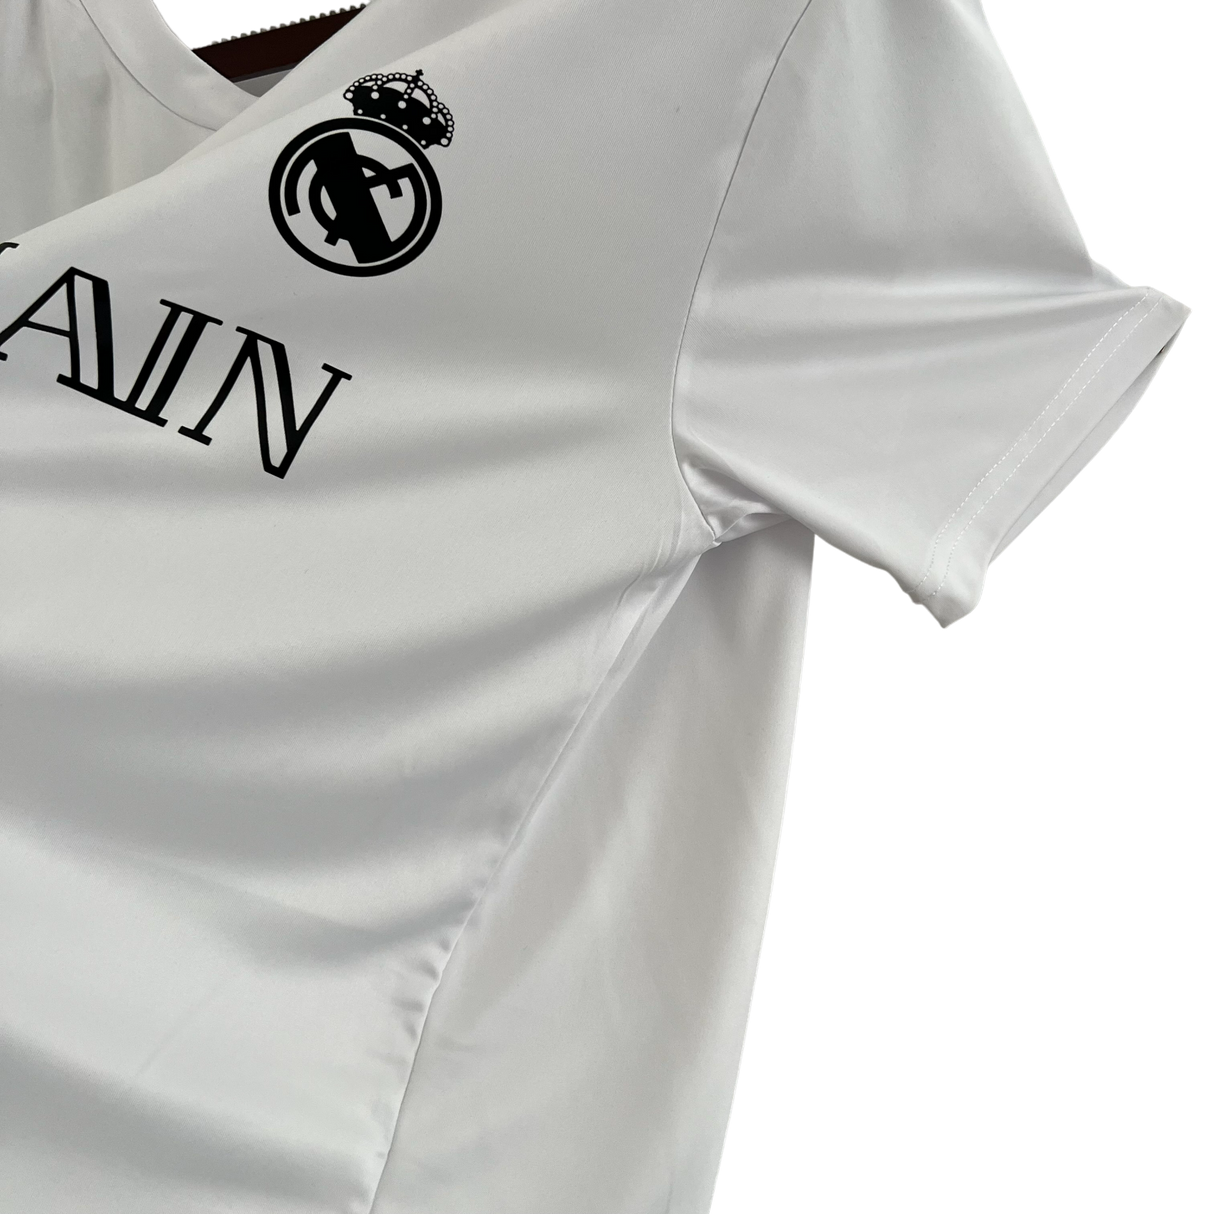 Real Madrid 23/24 Balmain White & Black